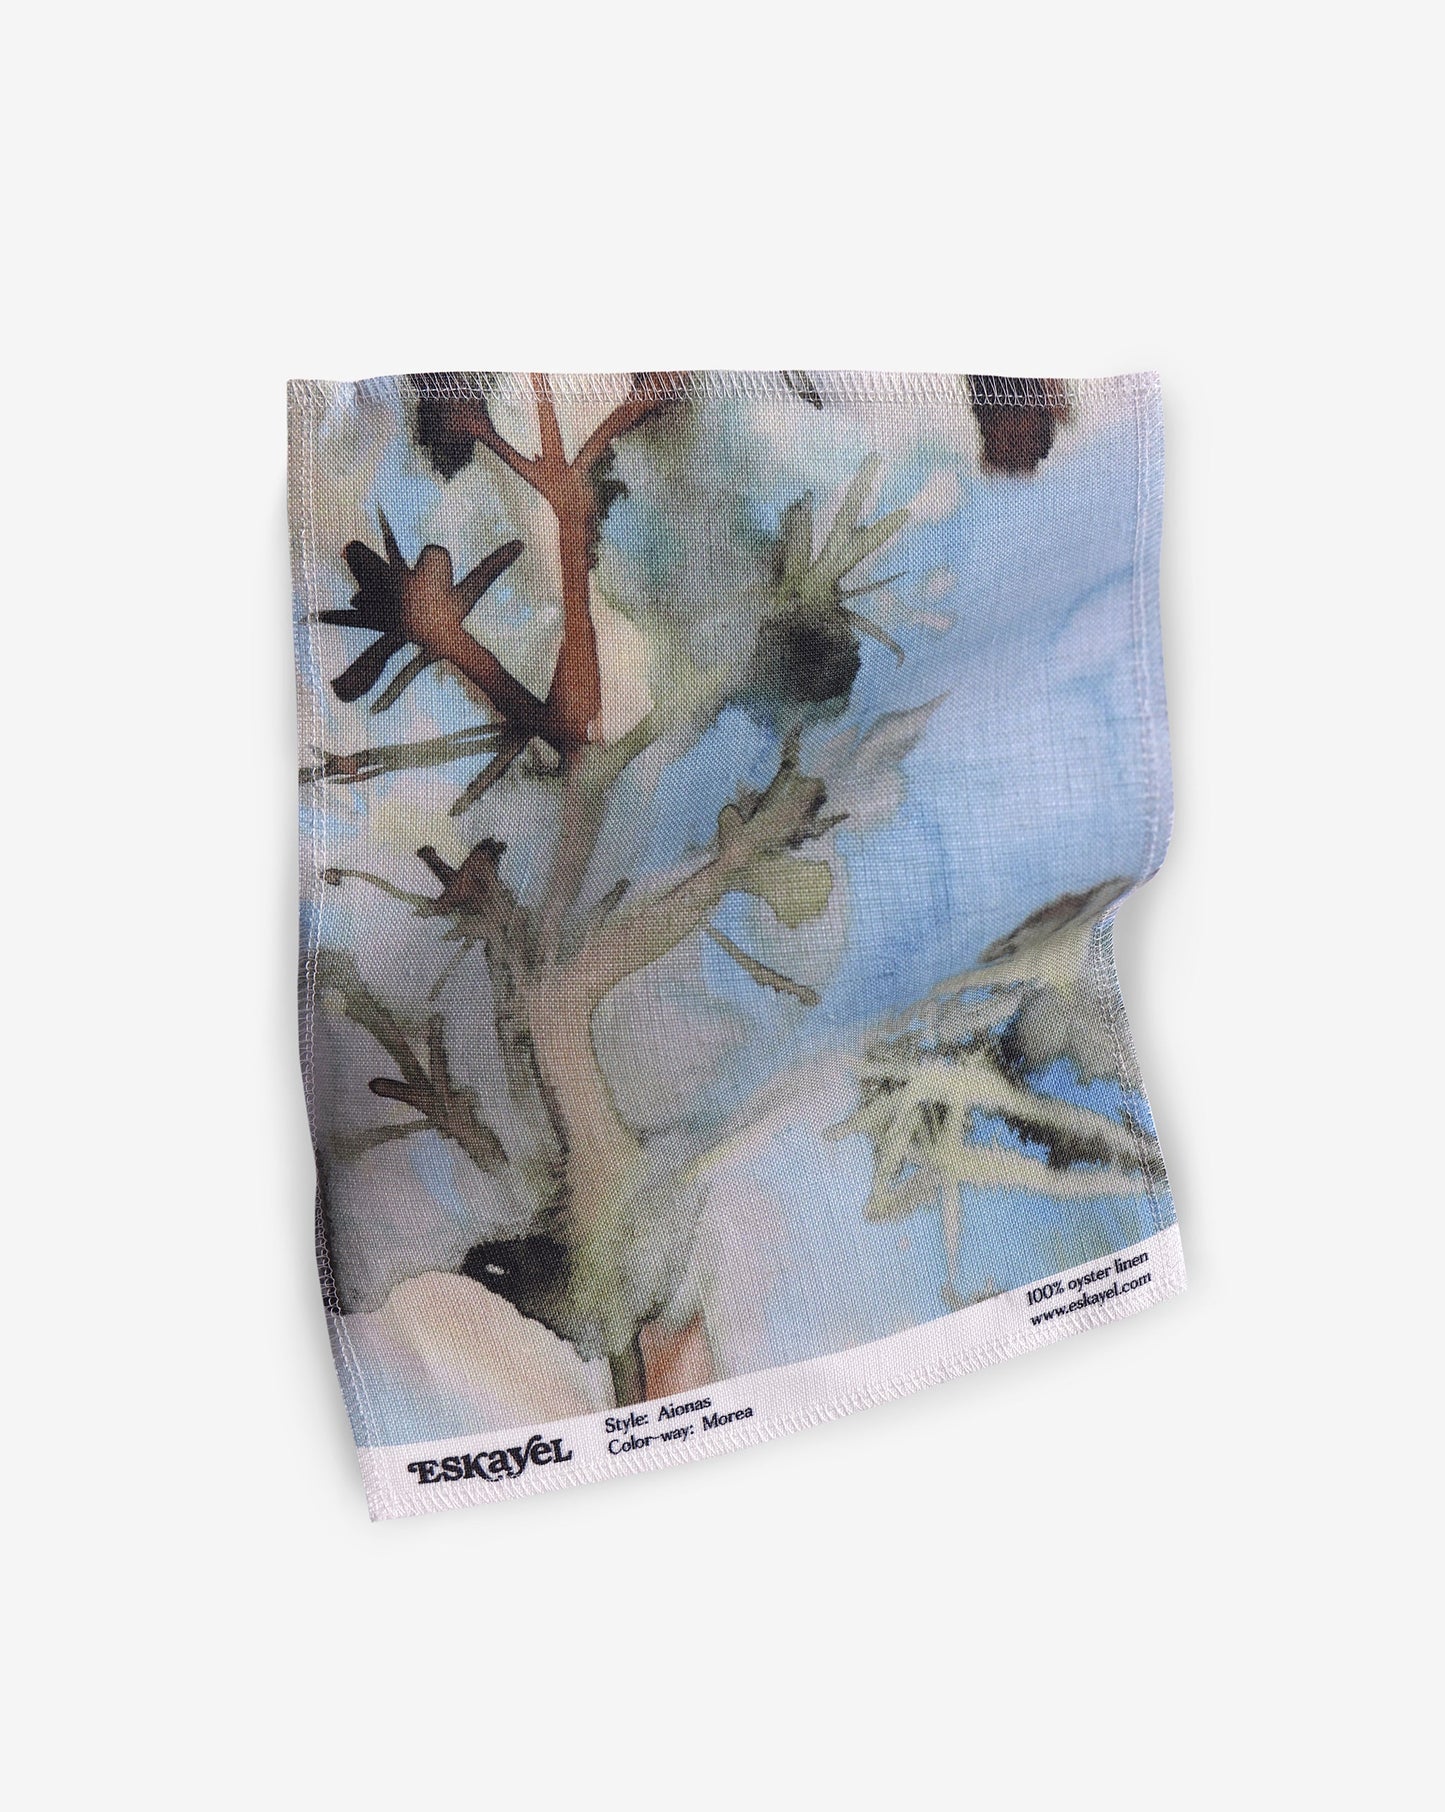 A Aionas Fabric Morea fabric embellished with a beautiful image of a tree